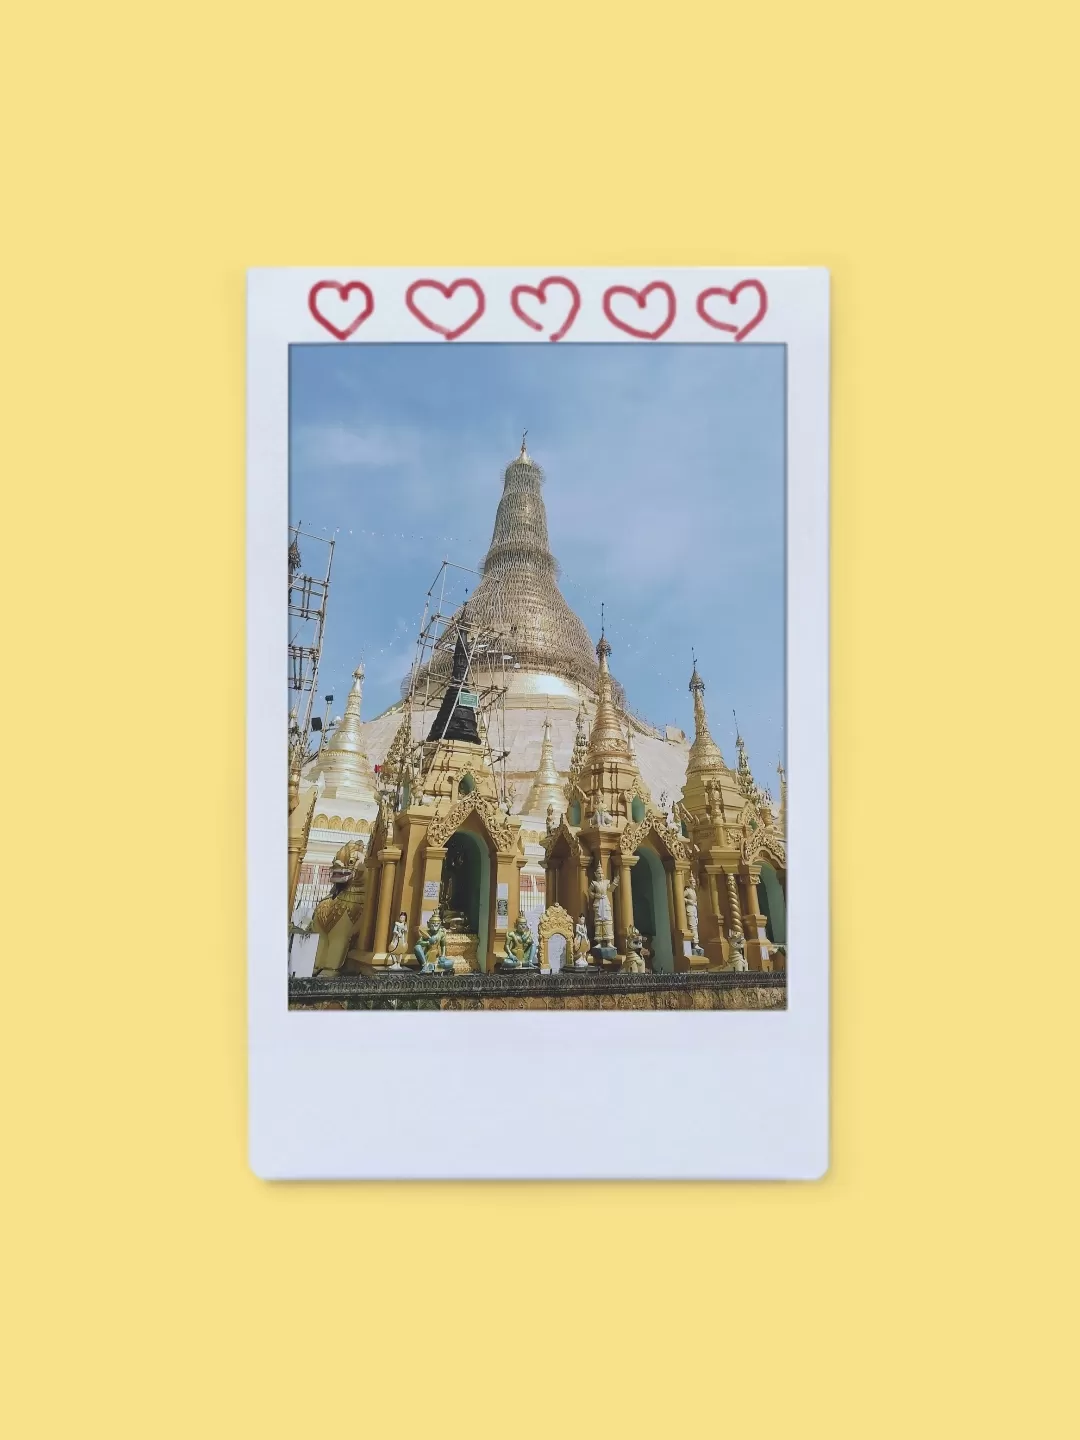 Photo of Shwedagon Pagoda By Ching Khan Nuam